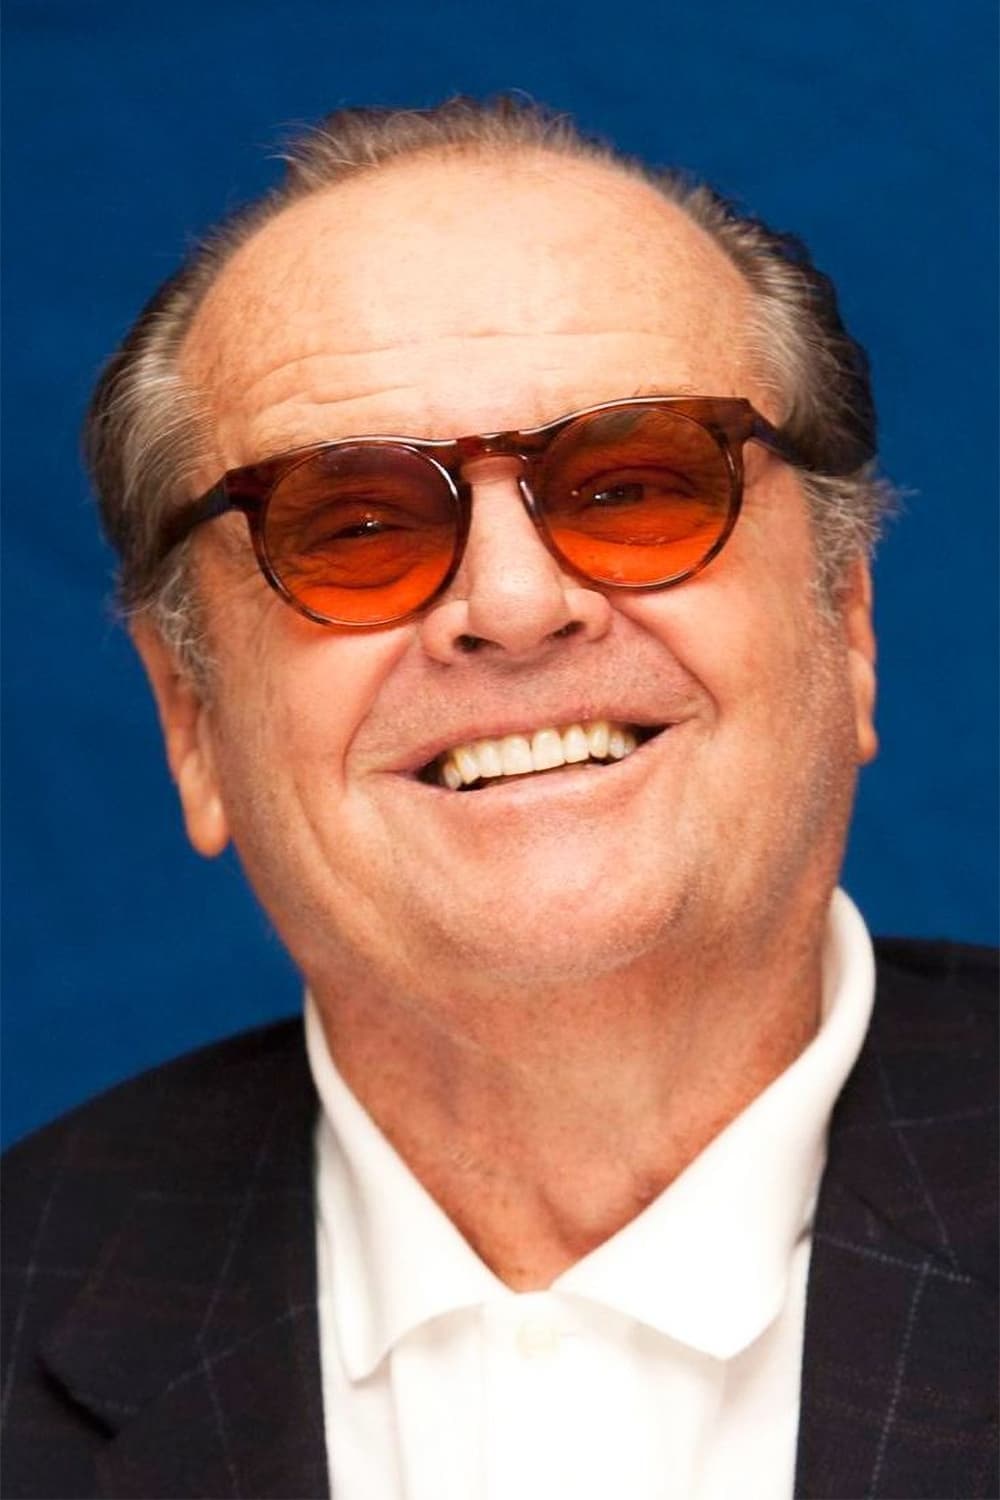 Jack Nicholson | Randle Patrick McMurphy